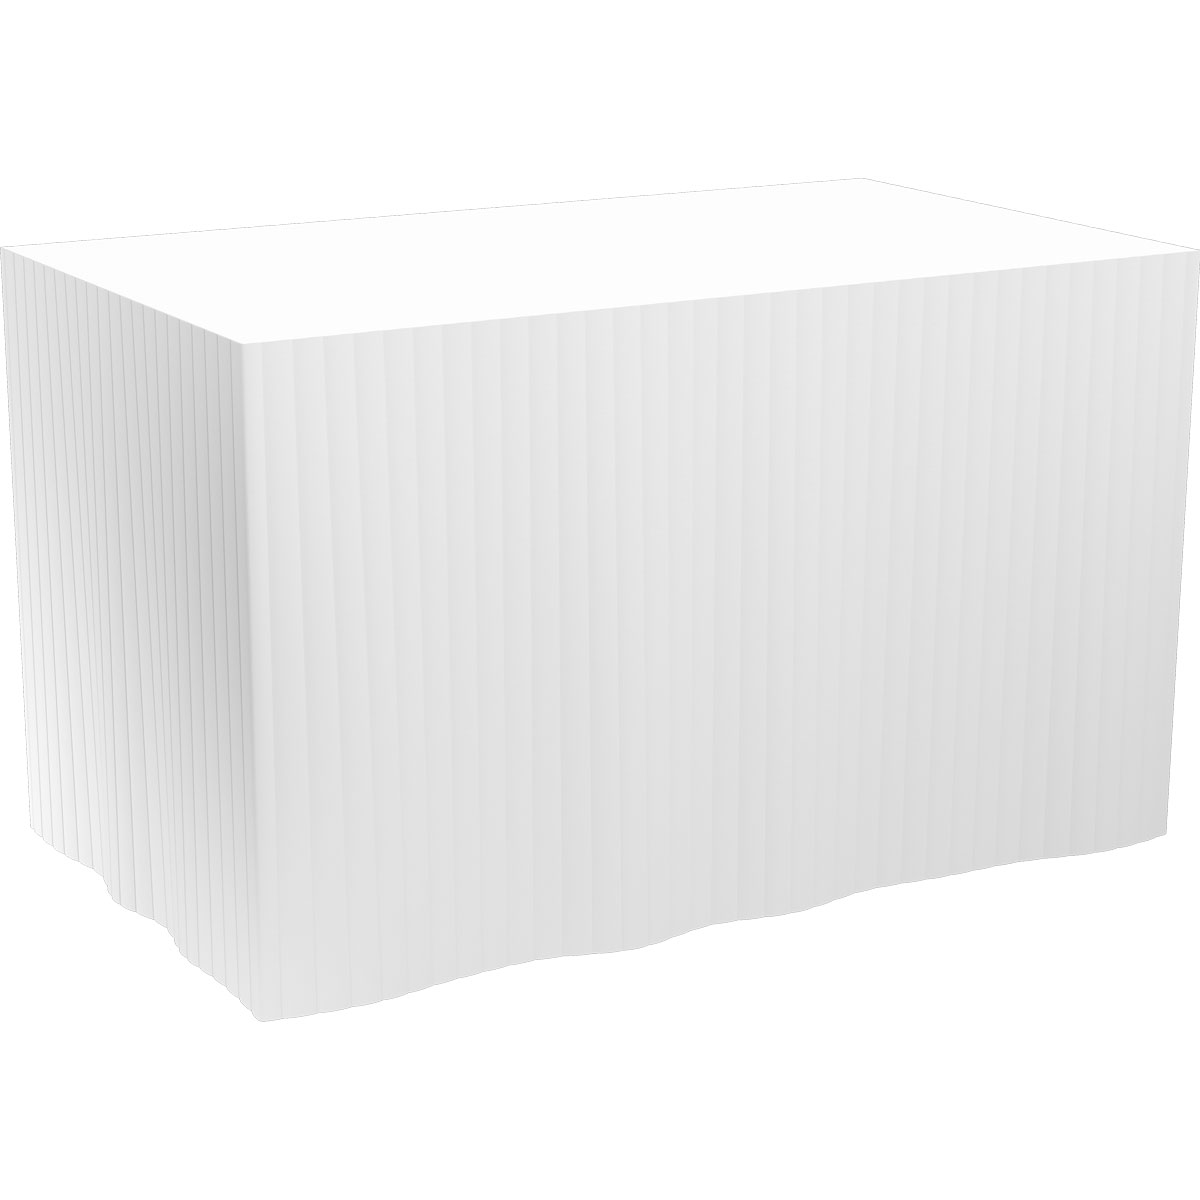 Duni Evolin-Tableskirts, selbstklebend 72 cm, 5 Abschnitte à 4 m weiß